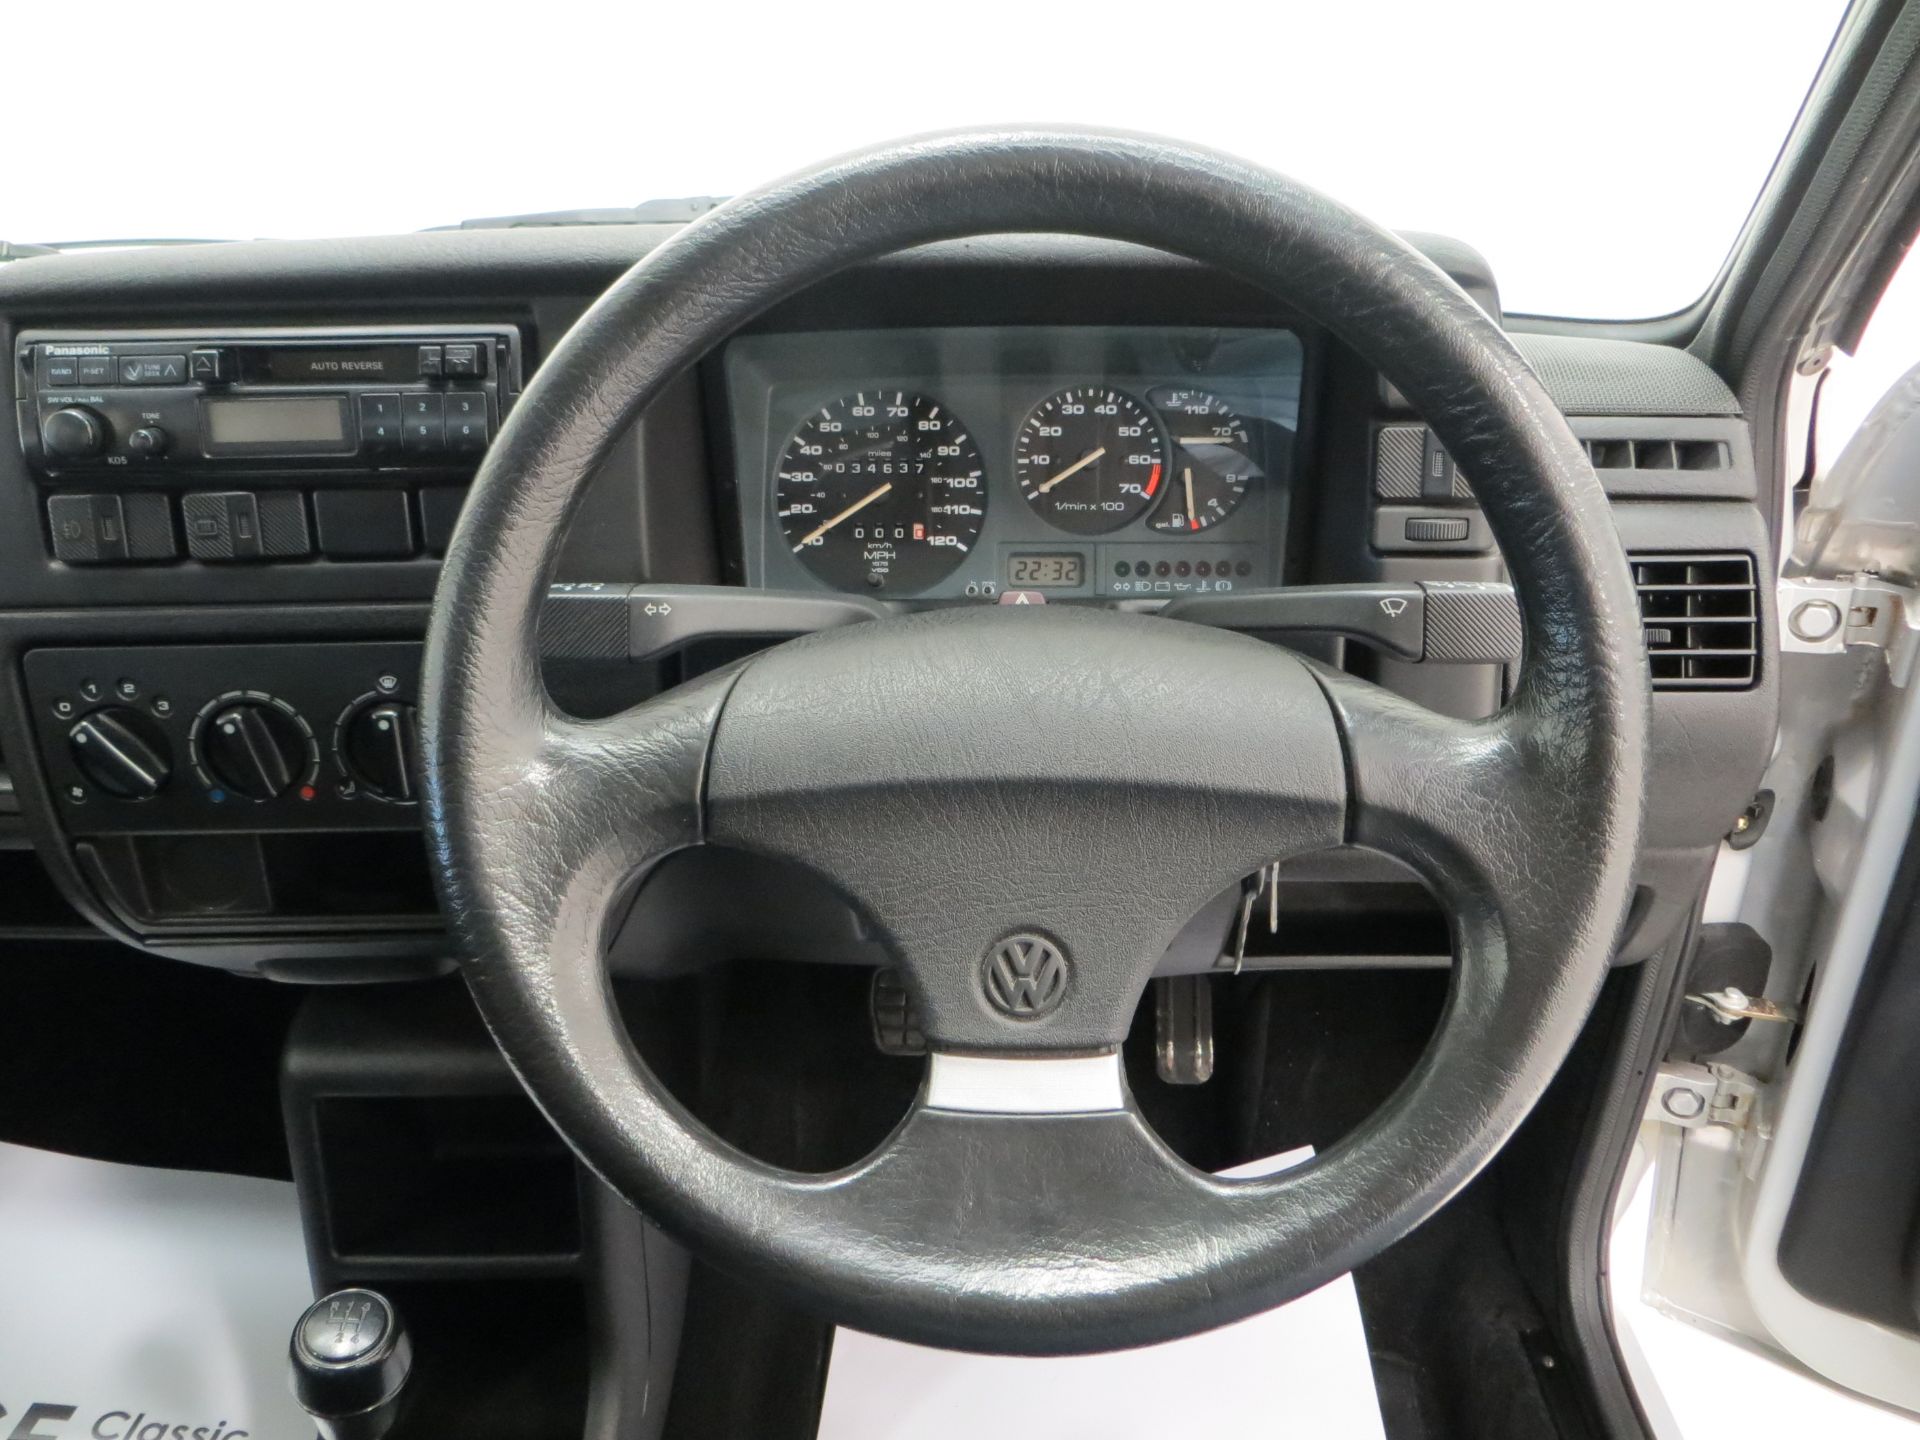 1992 Volkswagen Polo Mk2F Genesis - Image 44 of 86